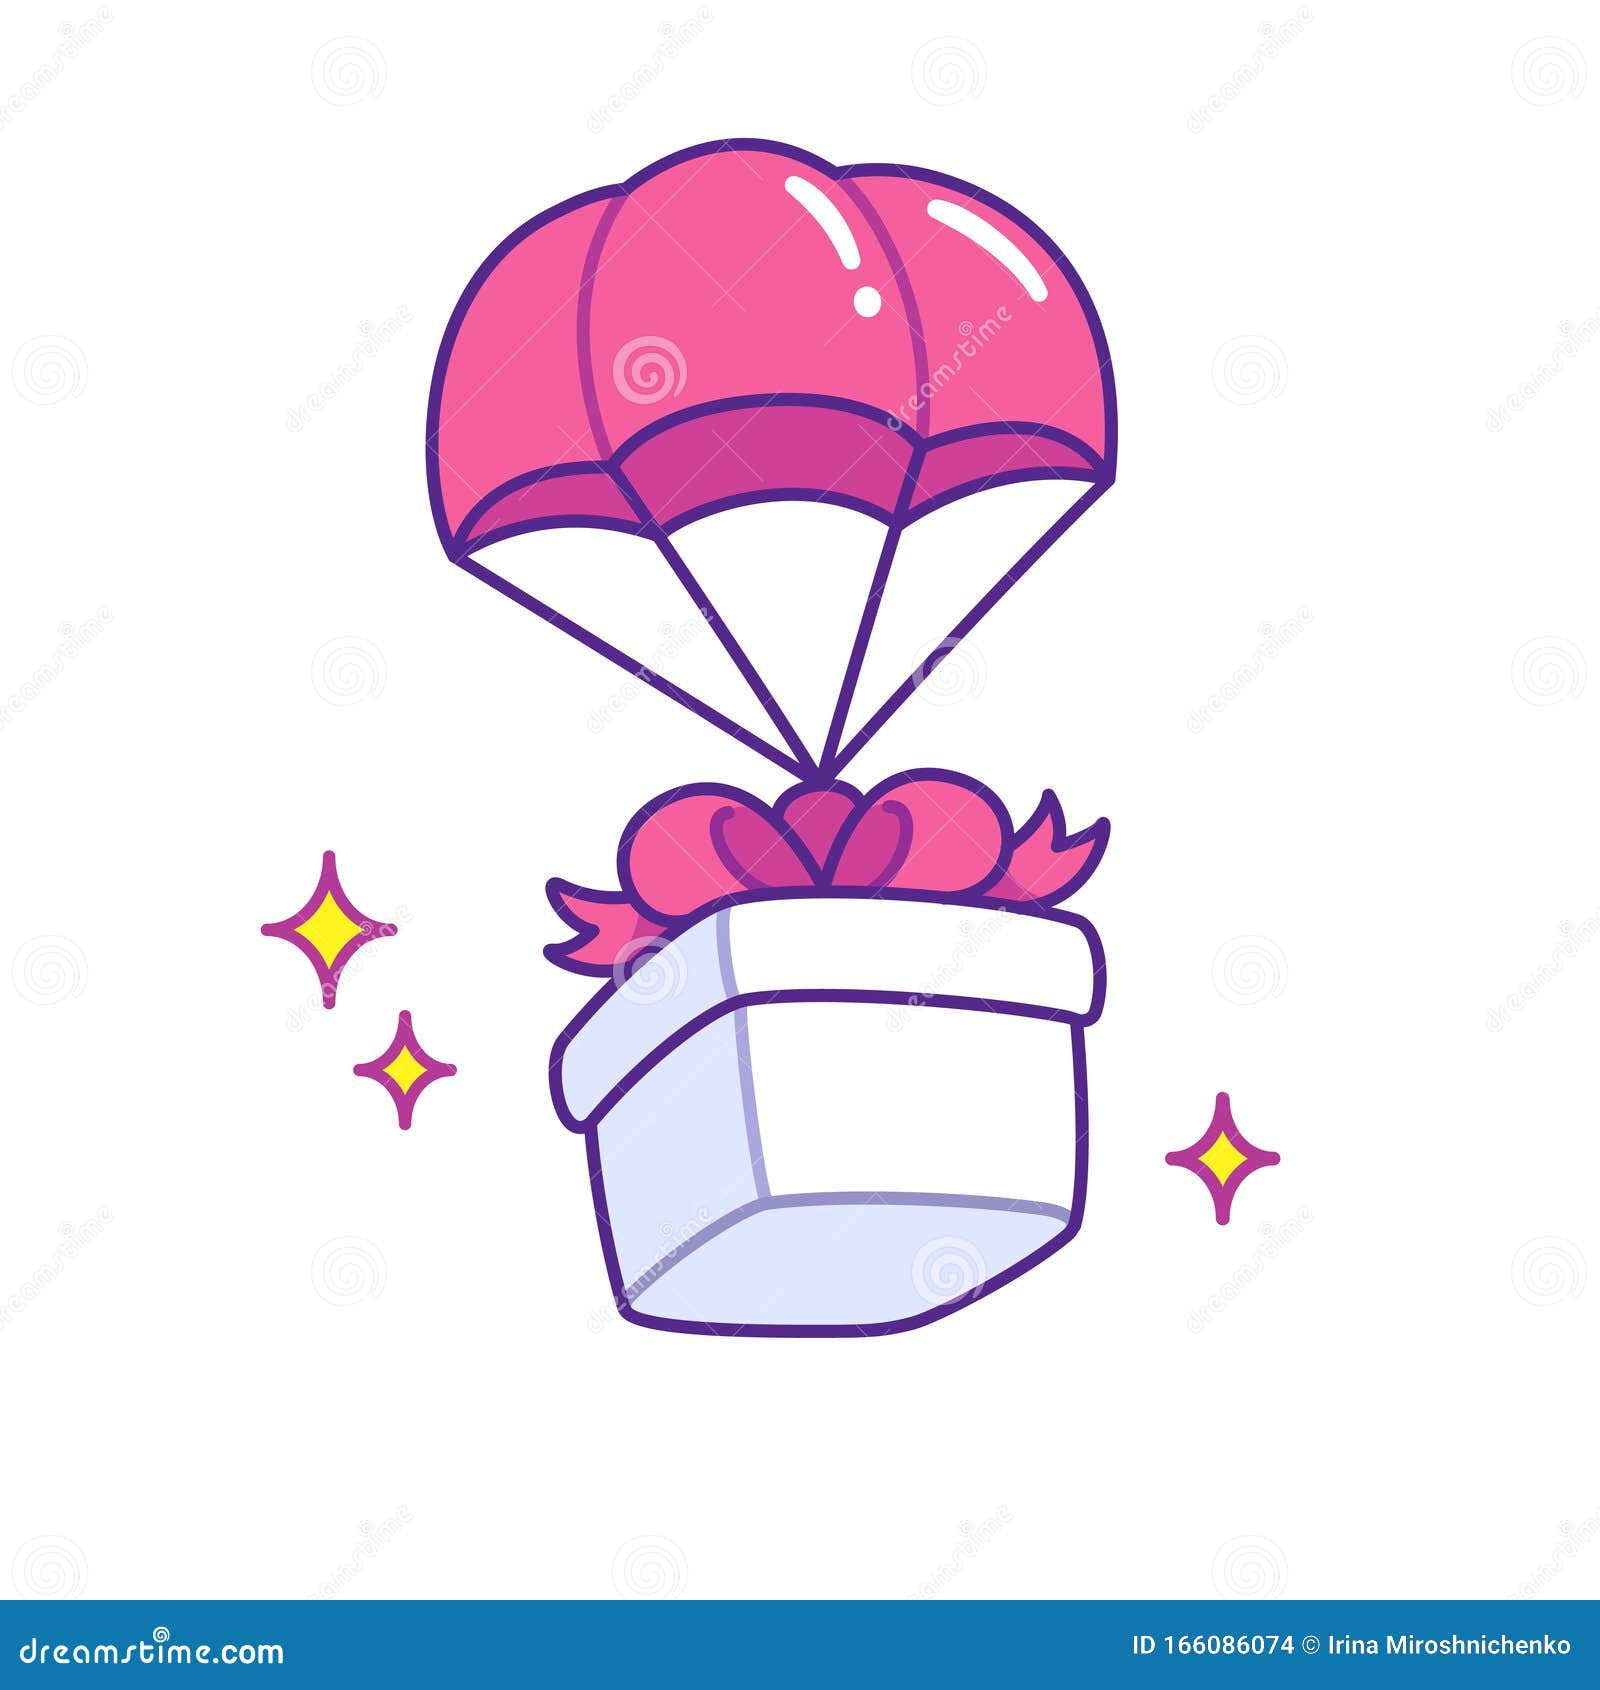 cartoon gift box with parachute